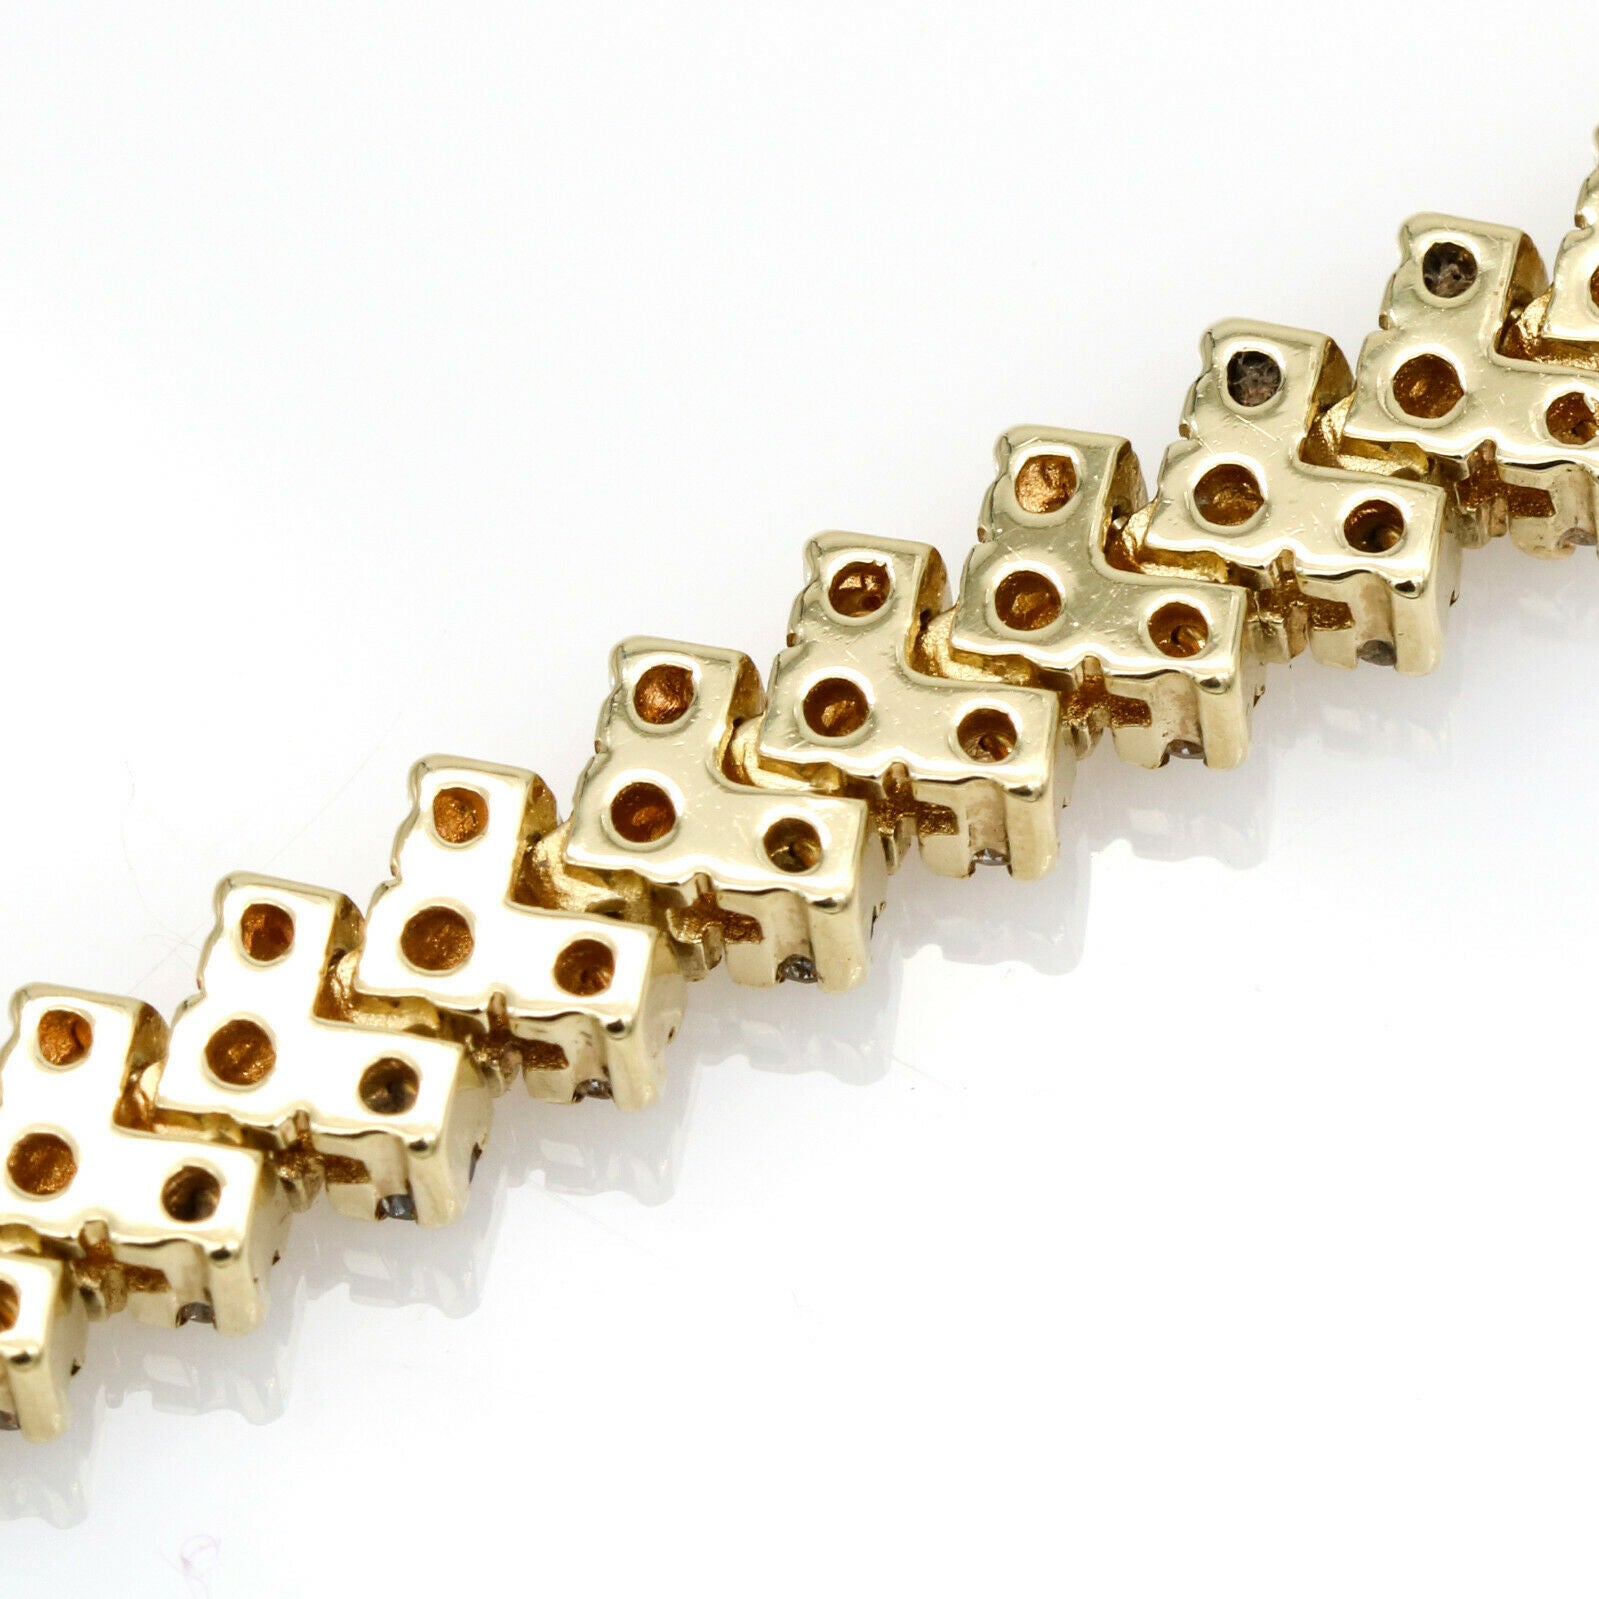 5 ct Triple-Row Diamond Tennis Bracelet in 14k Yellow Gold